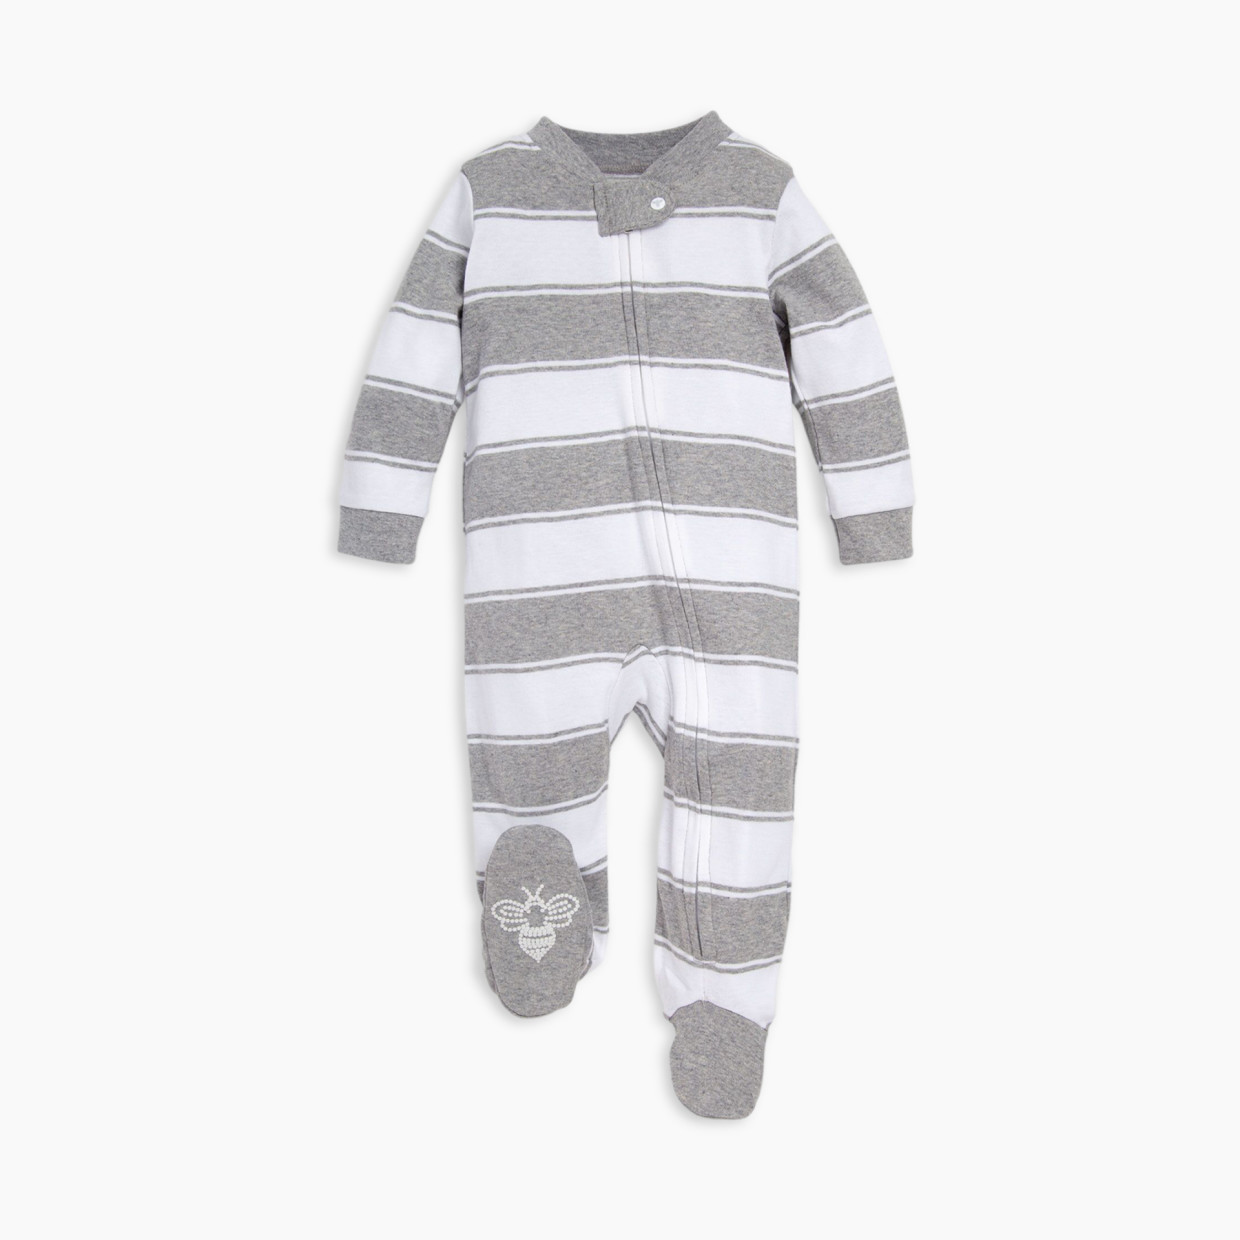 Burt's Bees Baby Organic Sleep & Play Footie Pajamas - Heather Grey Rugby Peace Stripe, 6-9 Months.